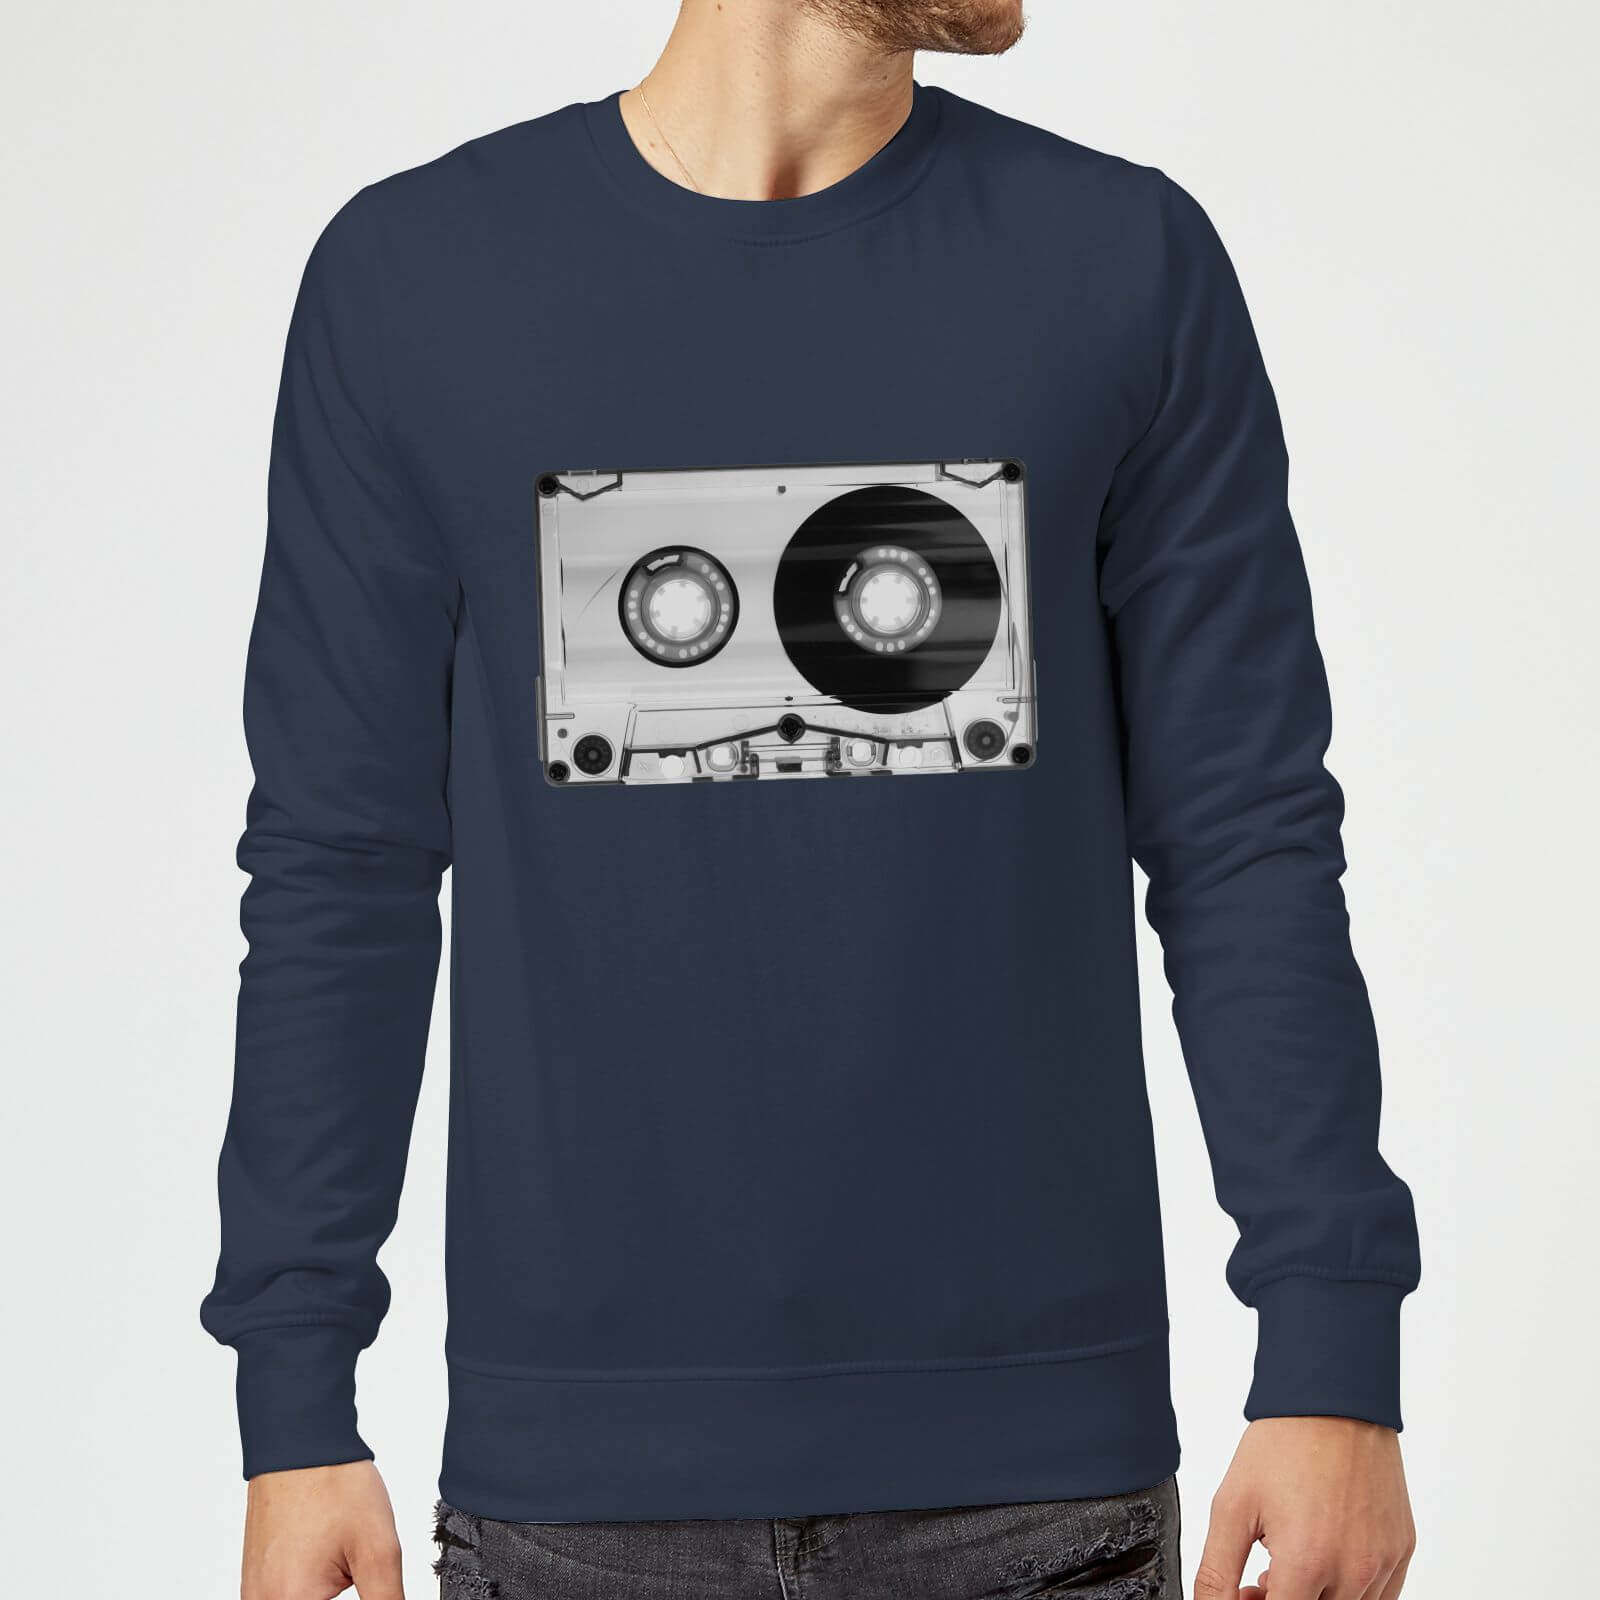 The Motivated Type Tape Sweatshirt - Navy - S - Navy